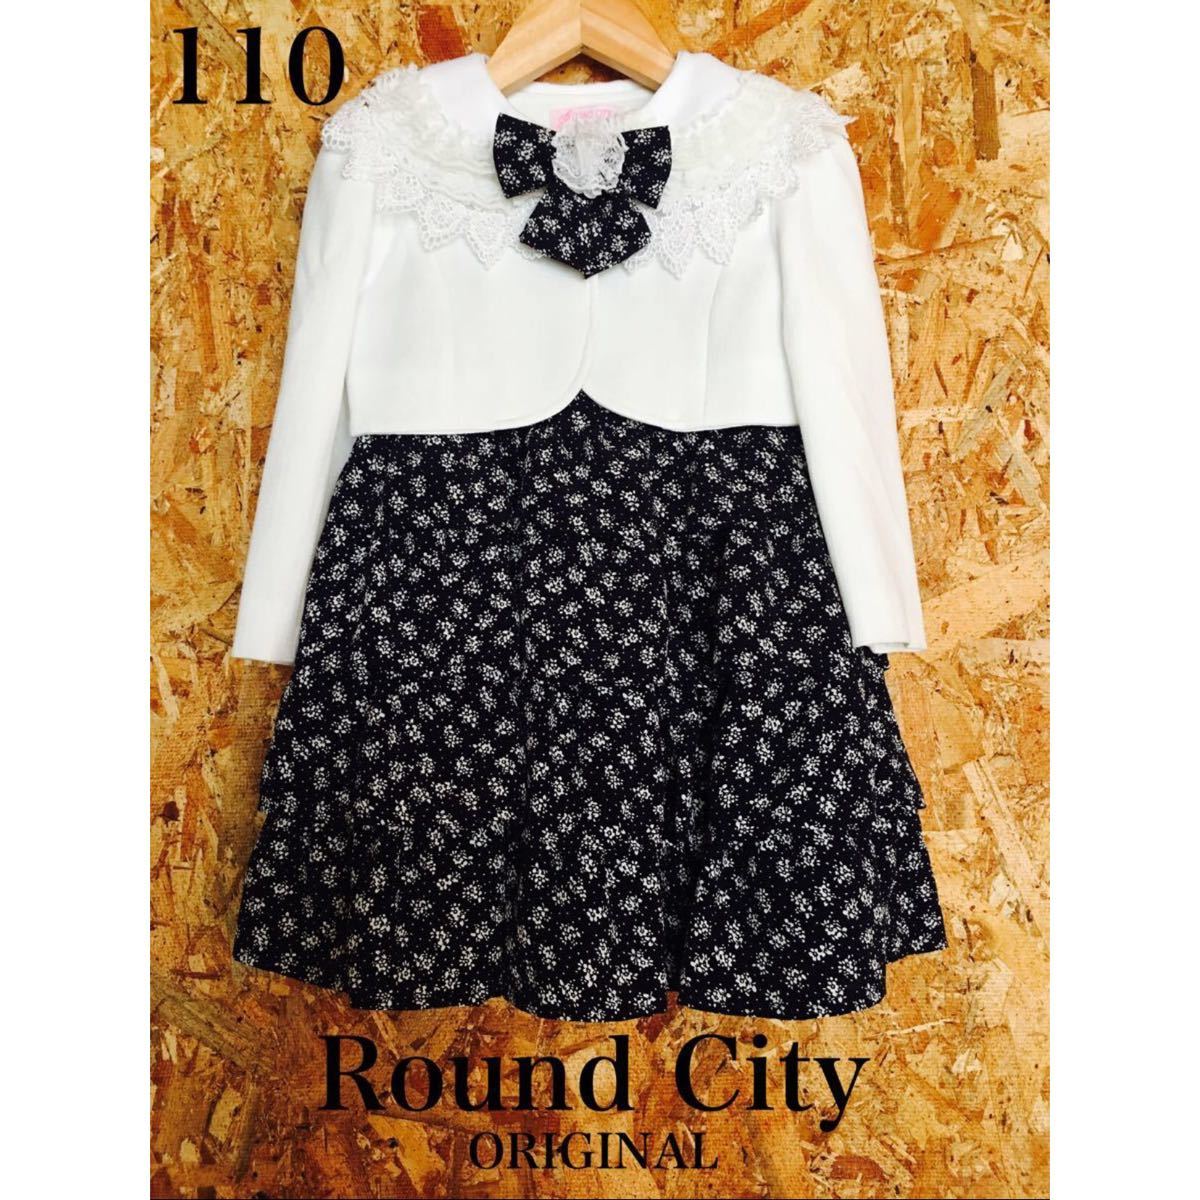 Round City ORIGINAL フォーマルワンピースセット 白×黒